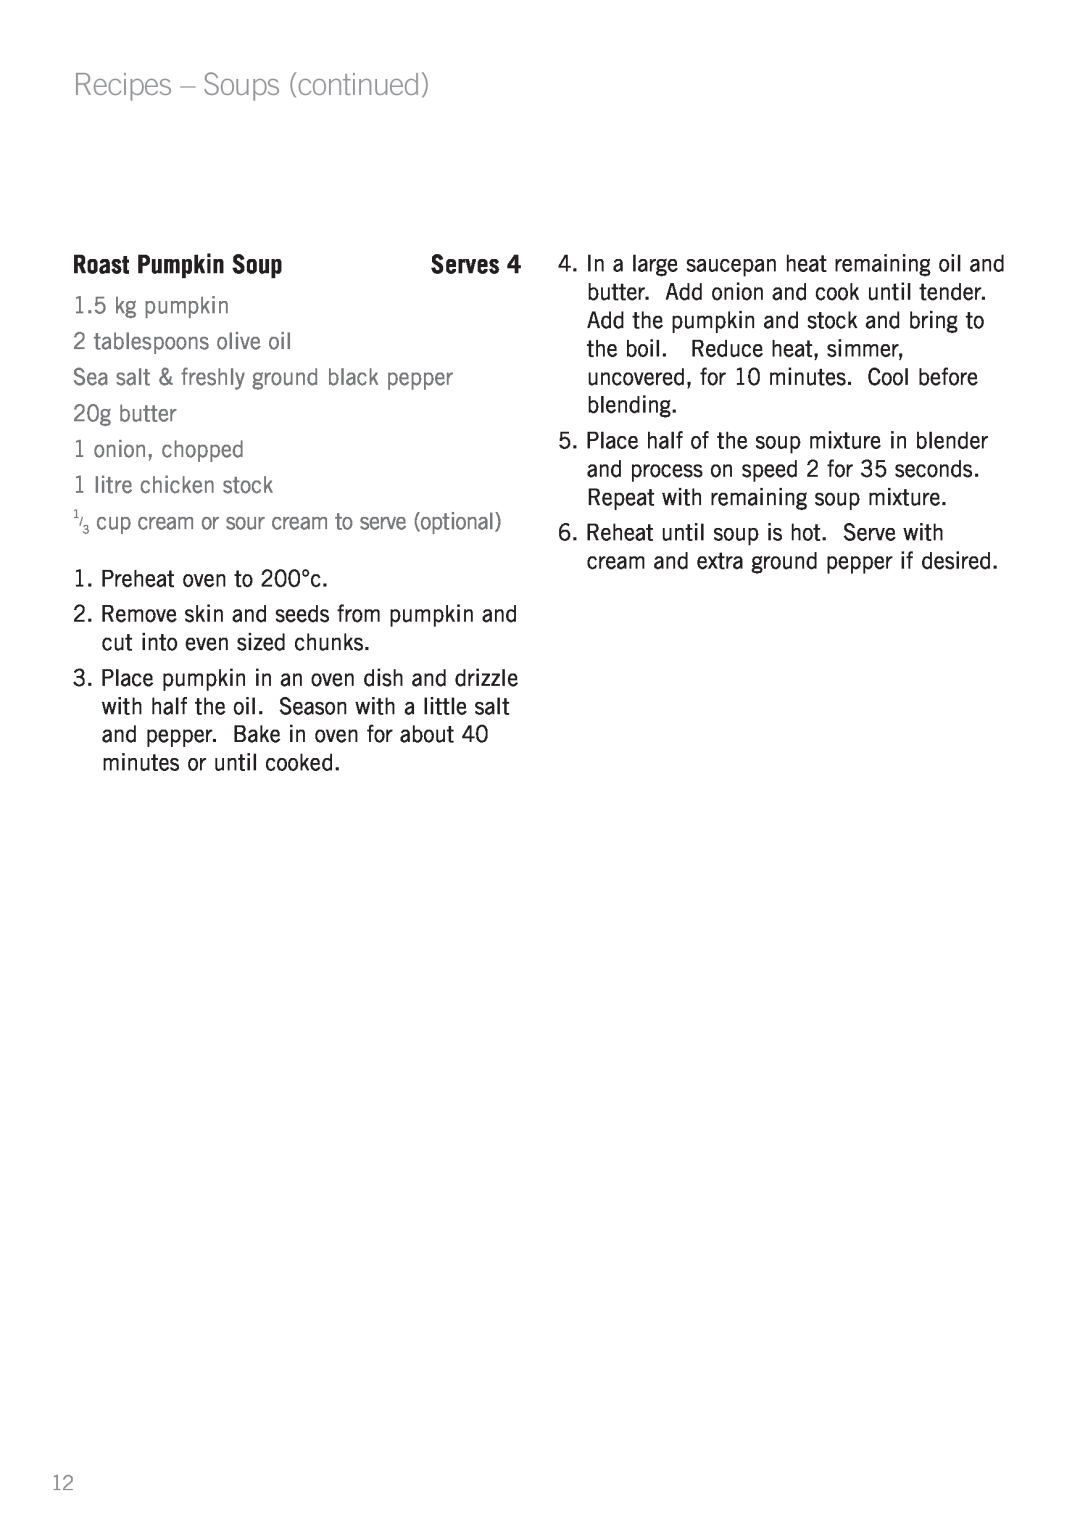 Sunbeam PB7610 manual Recipes - Soups continued, Roast Pumpkin Soup 